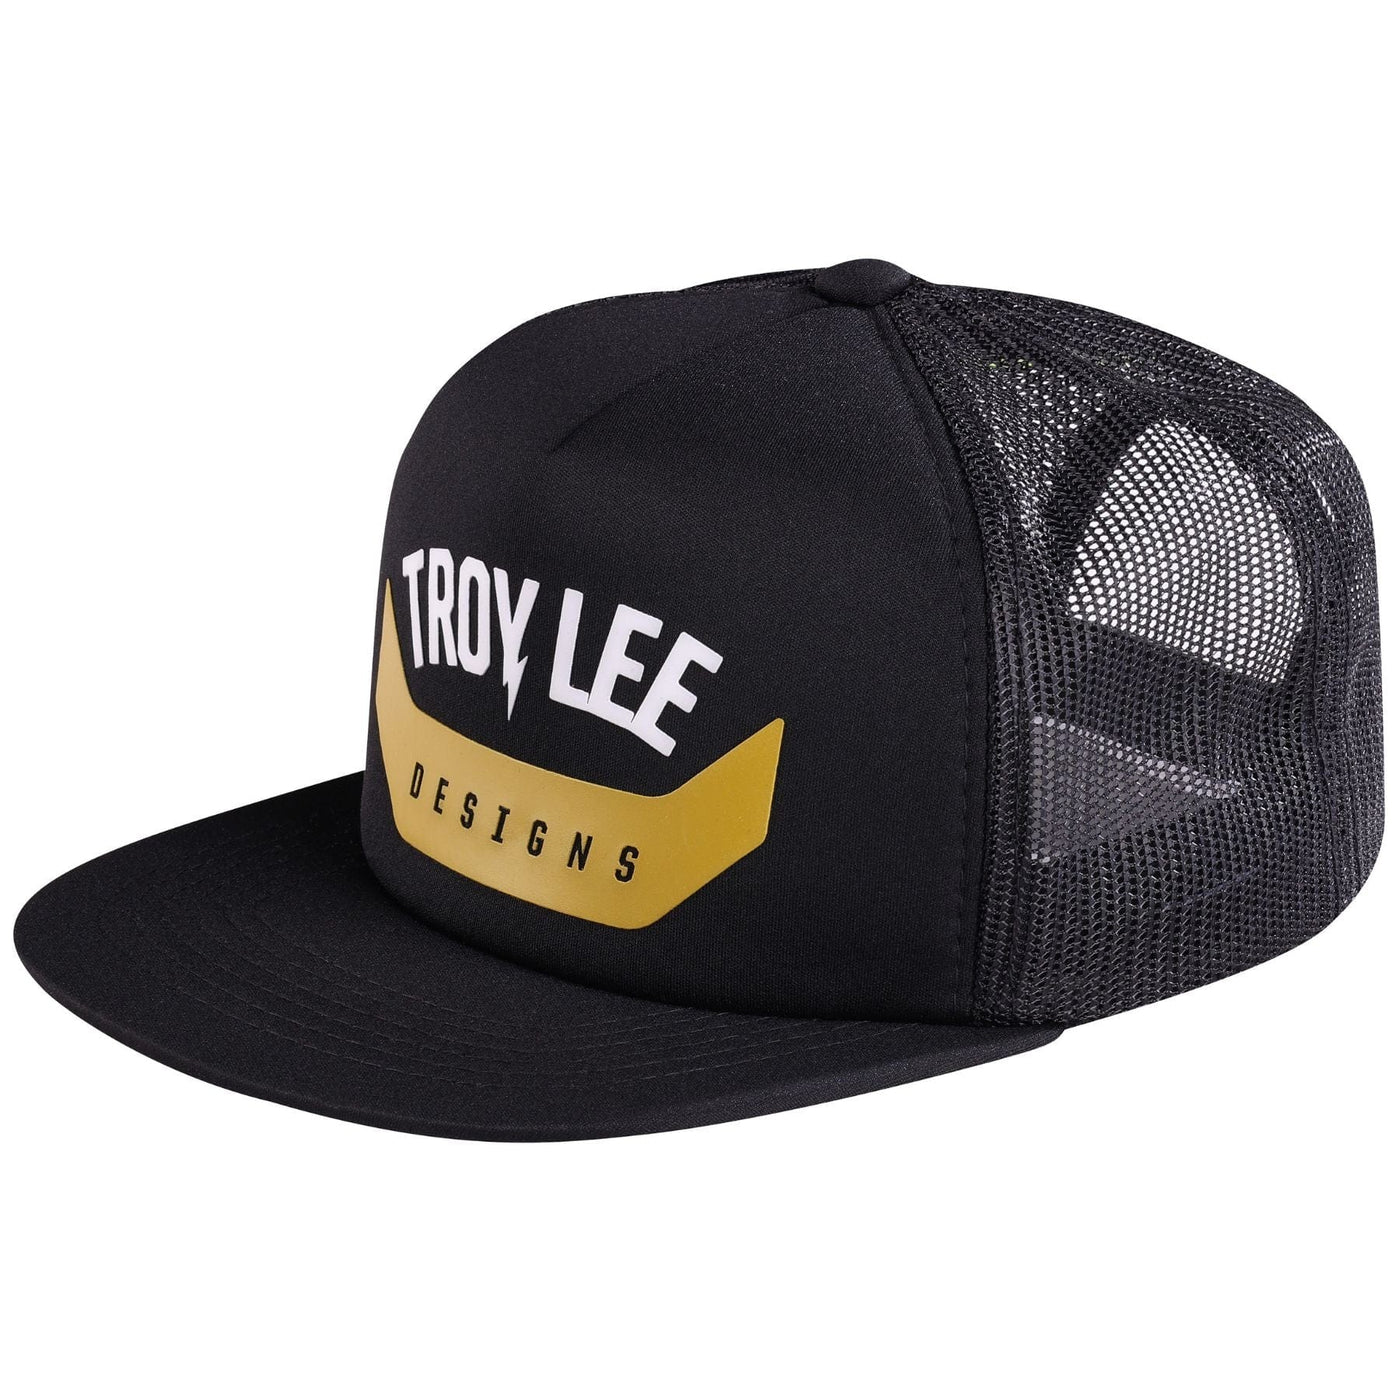 Troy Lee Designs Trucker Arc Snapback Hat - Black/Gold 8Lines Shop - Fast Shipping